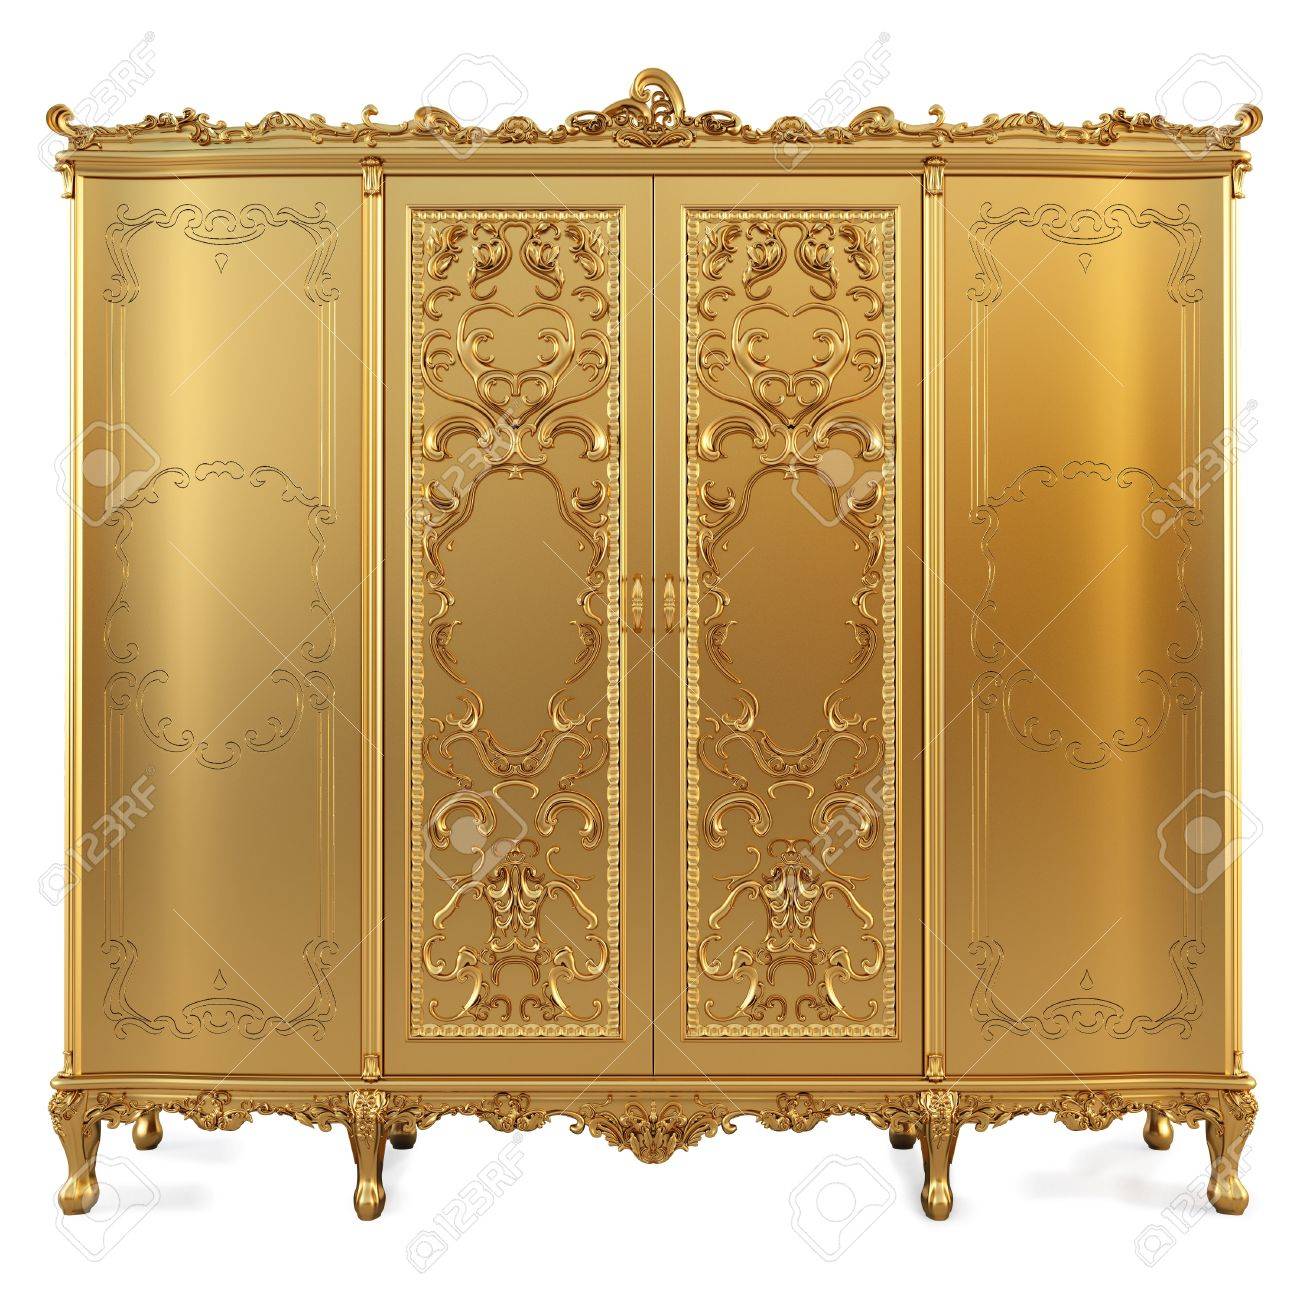 8828621-golden-classic-locker-isolated-on-white--Stock-Photo-furniture.jpg